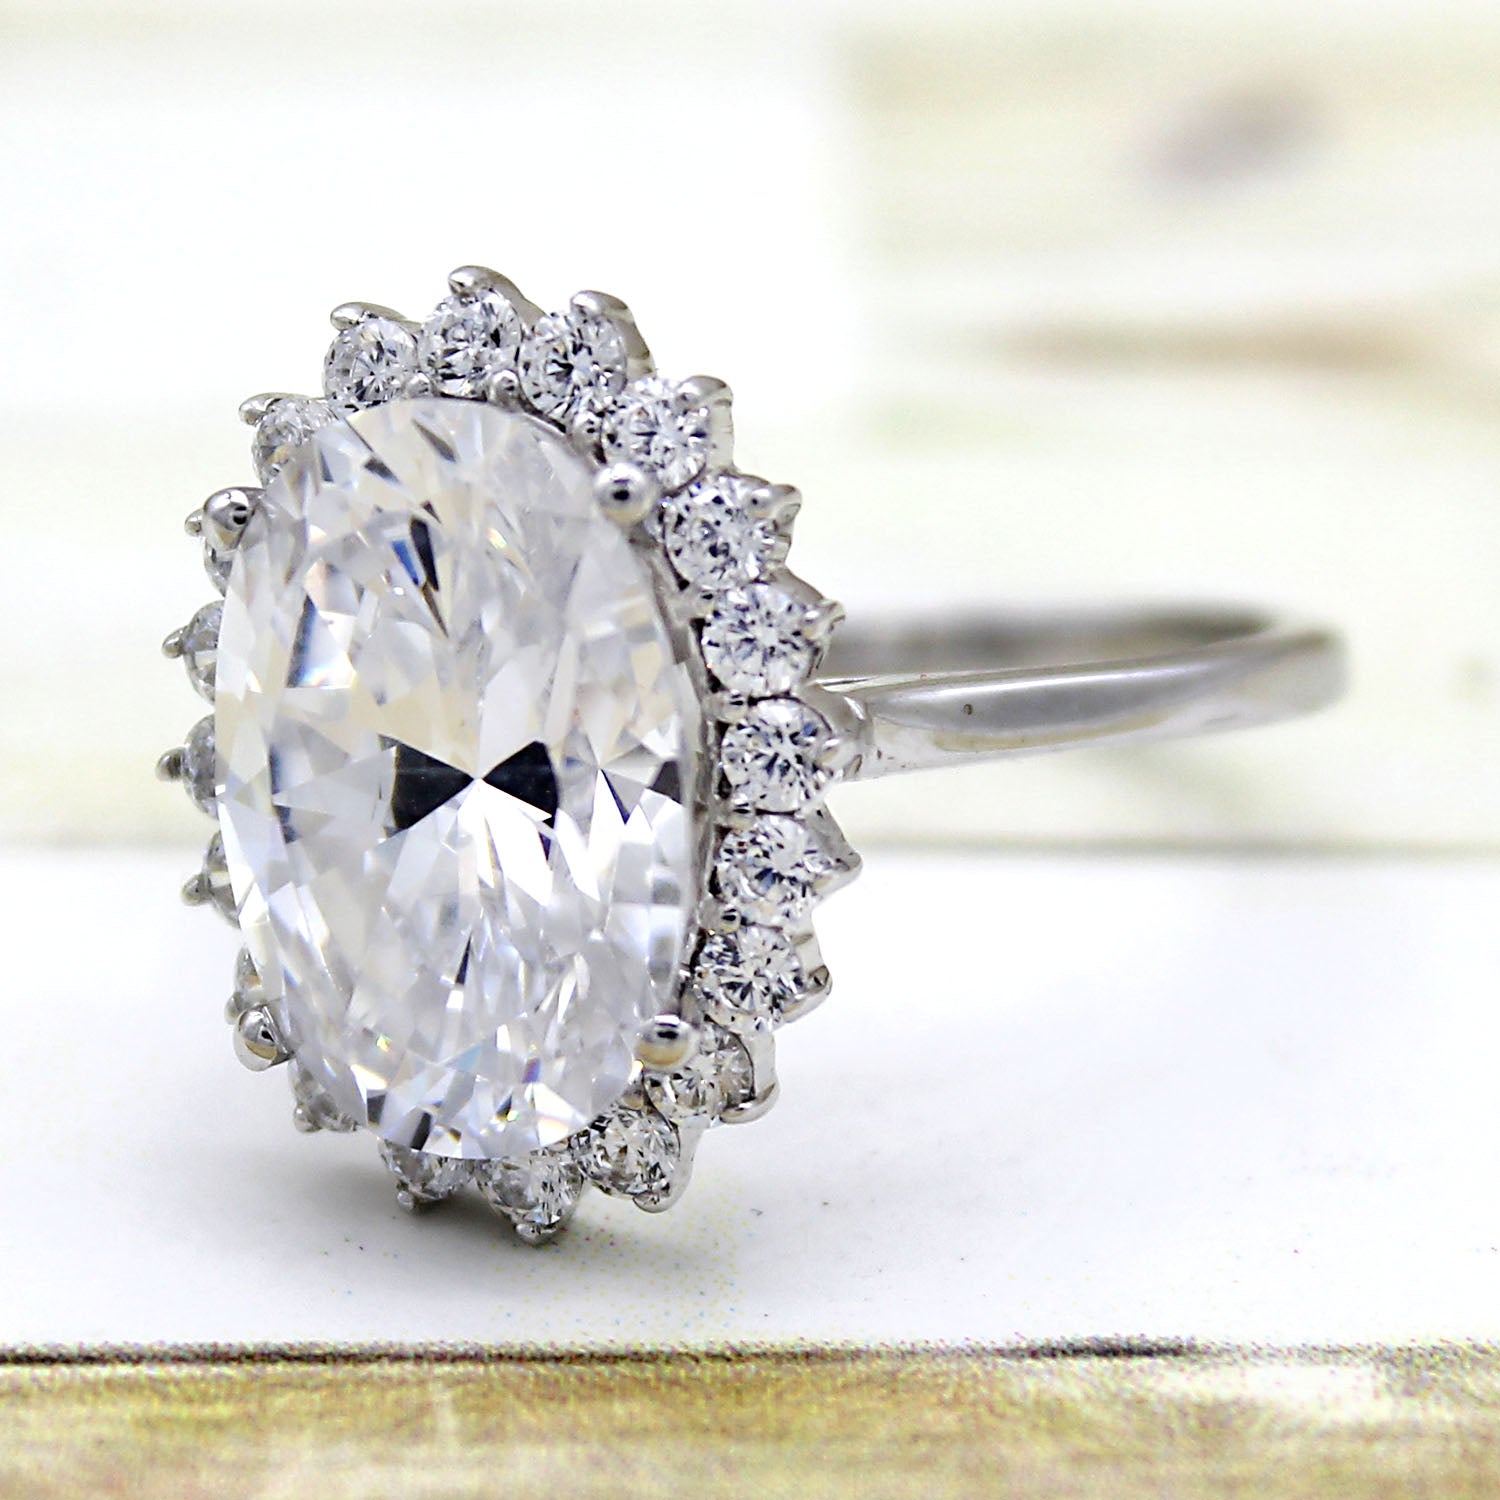 5 Carat Diamond Rings | Jacob Mercari